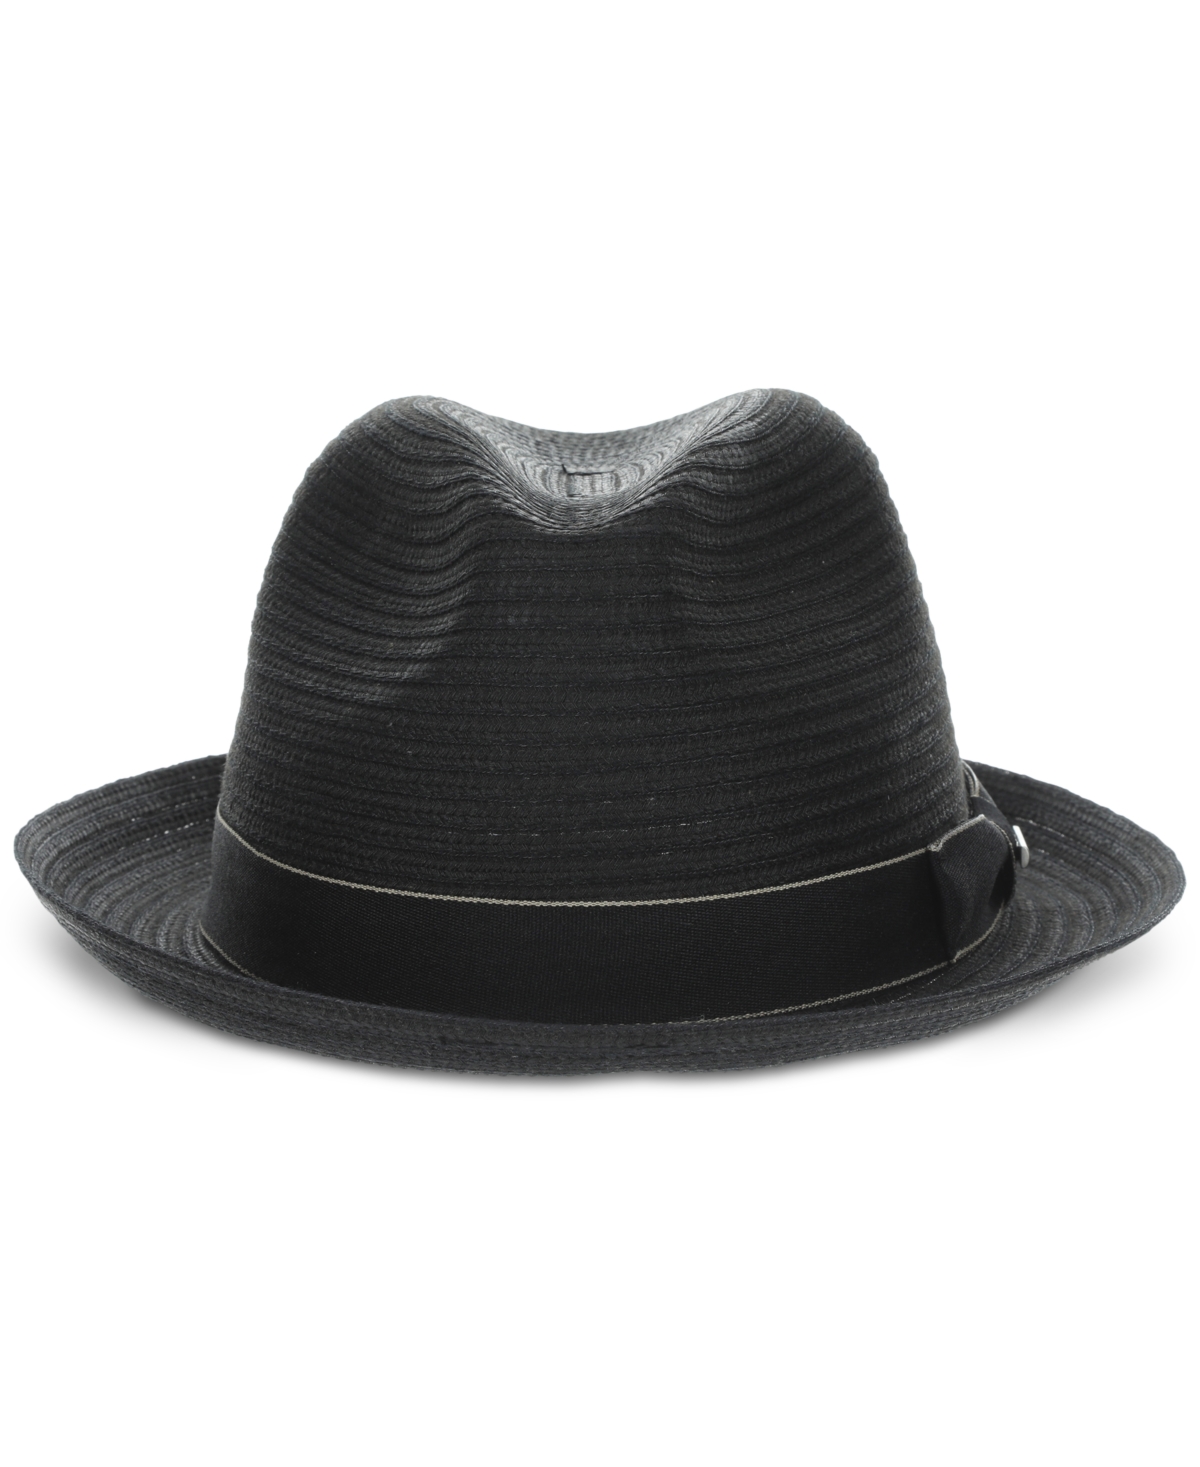 Dorfman Pacific Men's Braided Fedora Hat - Black